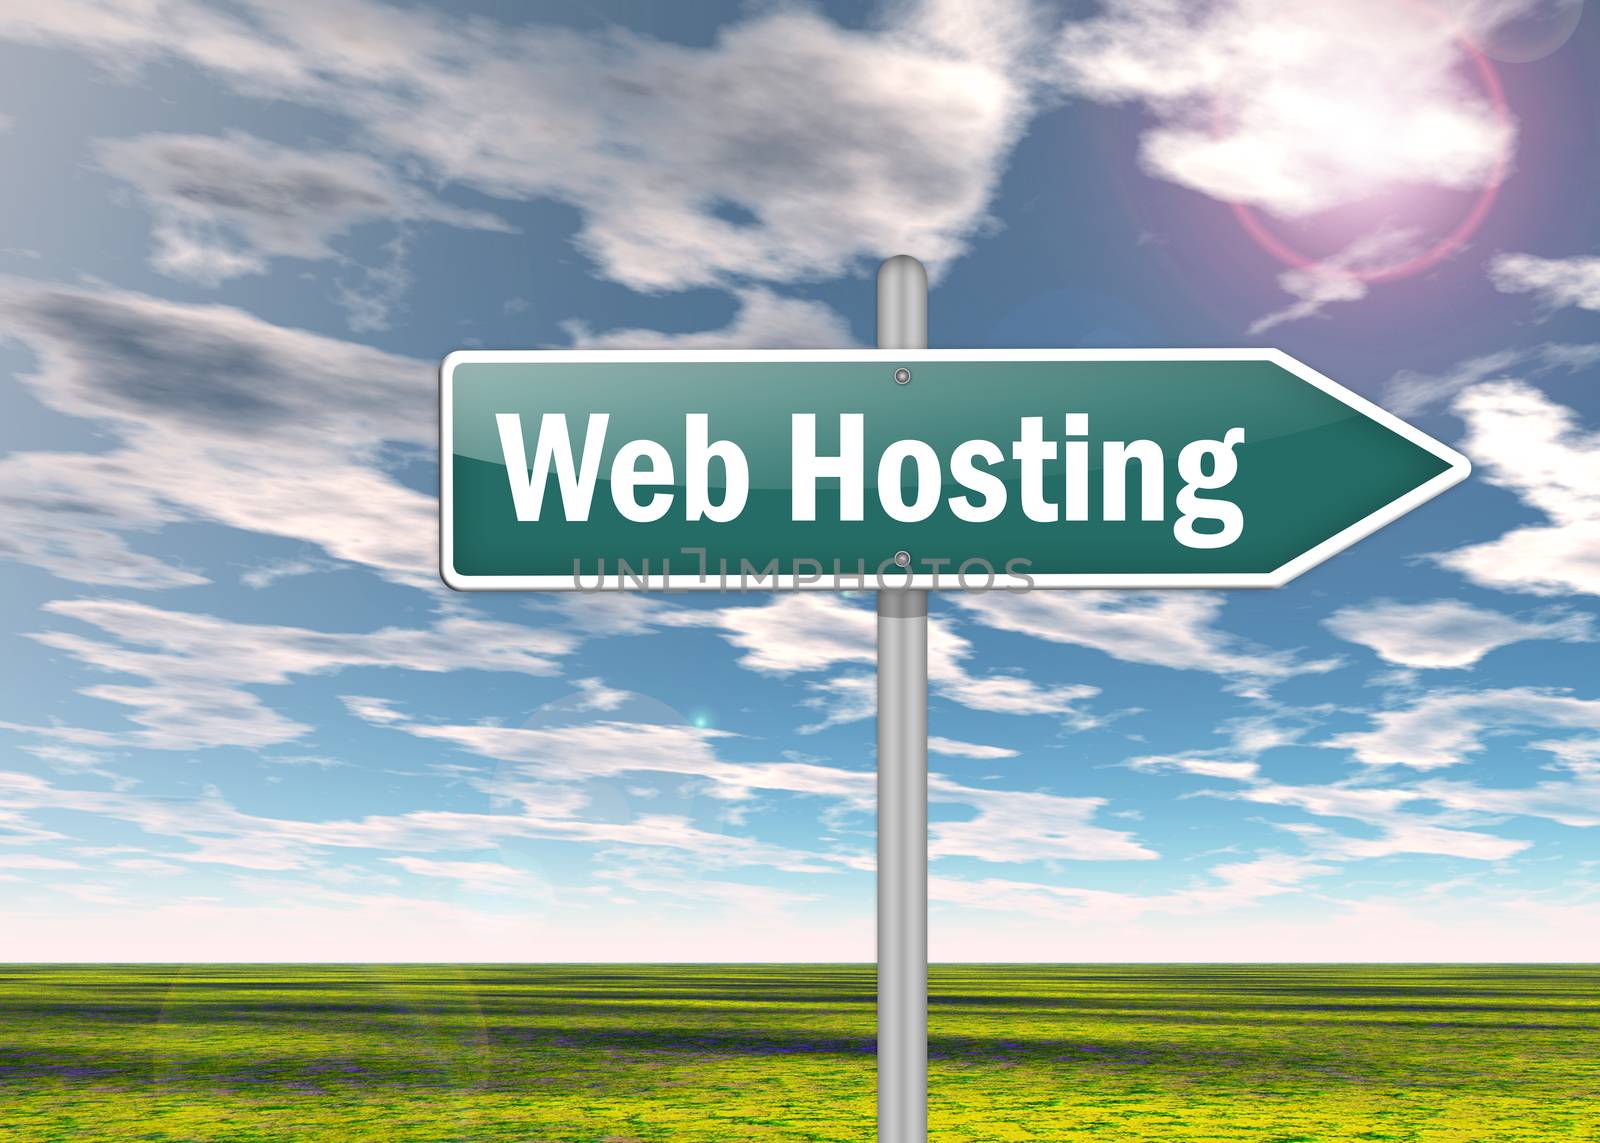 Signpost "Web Hosting"